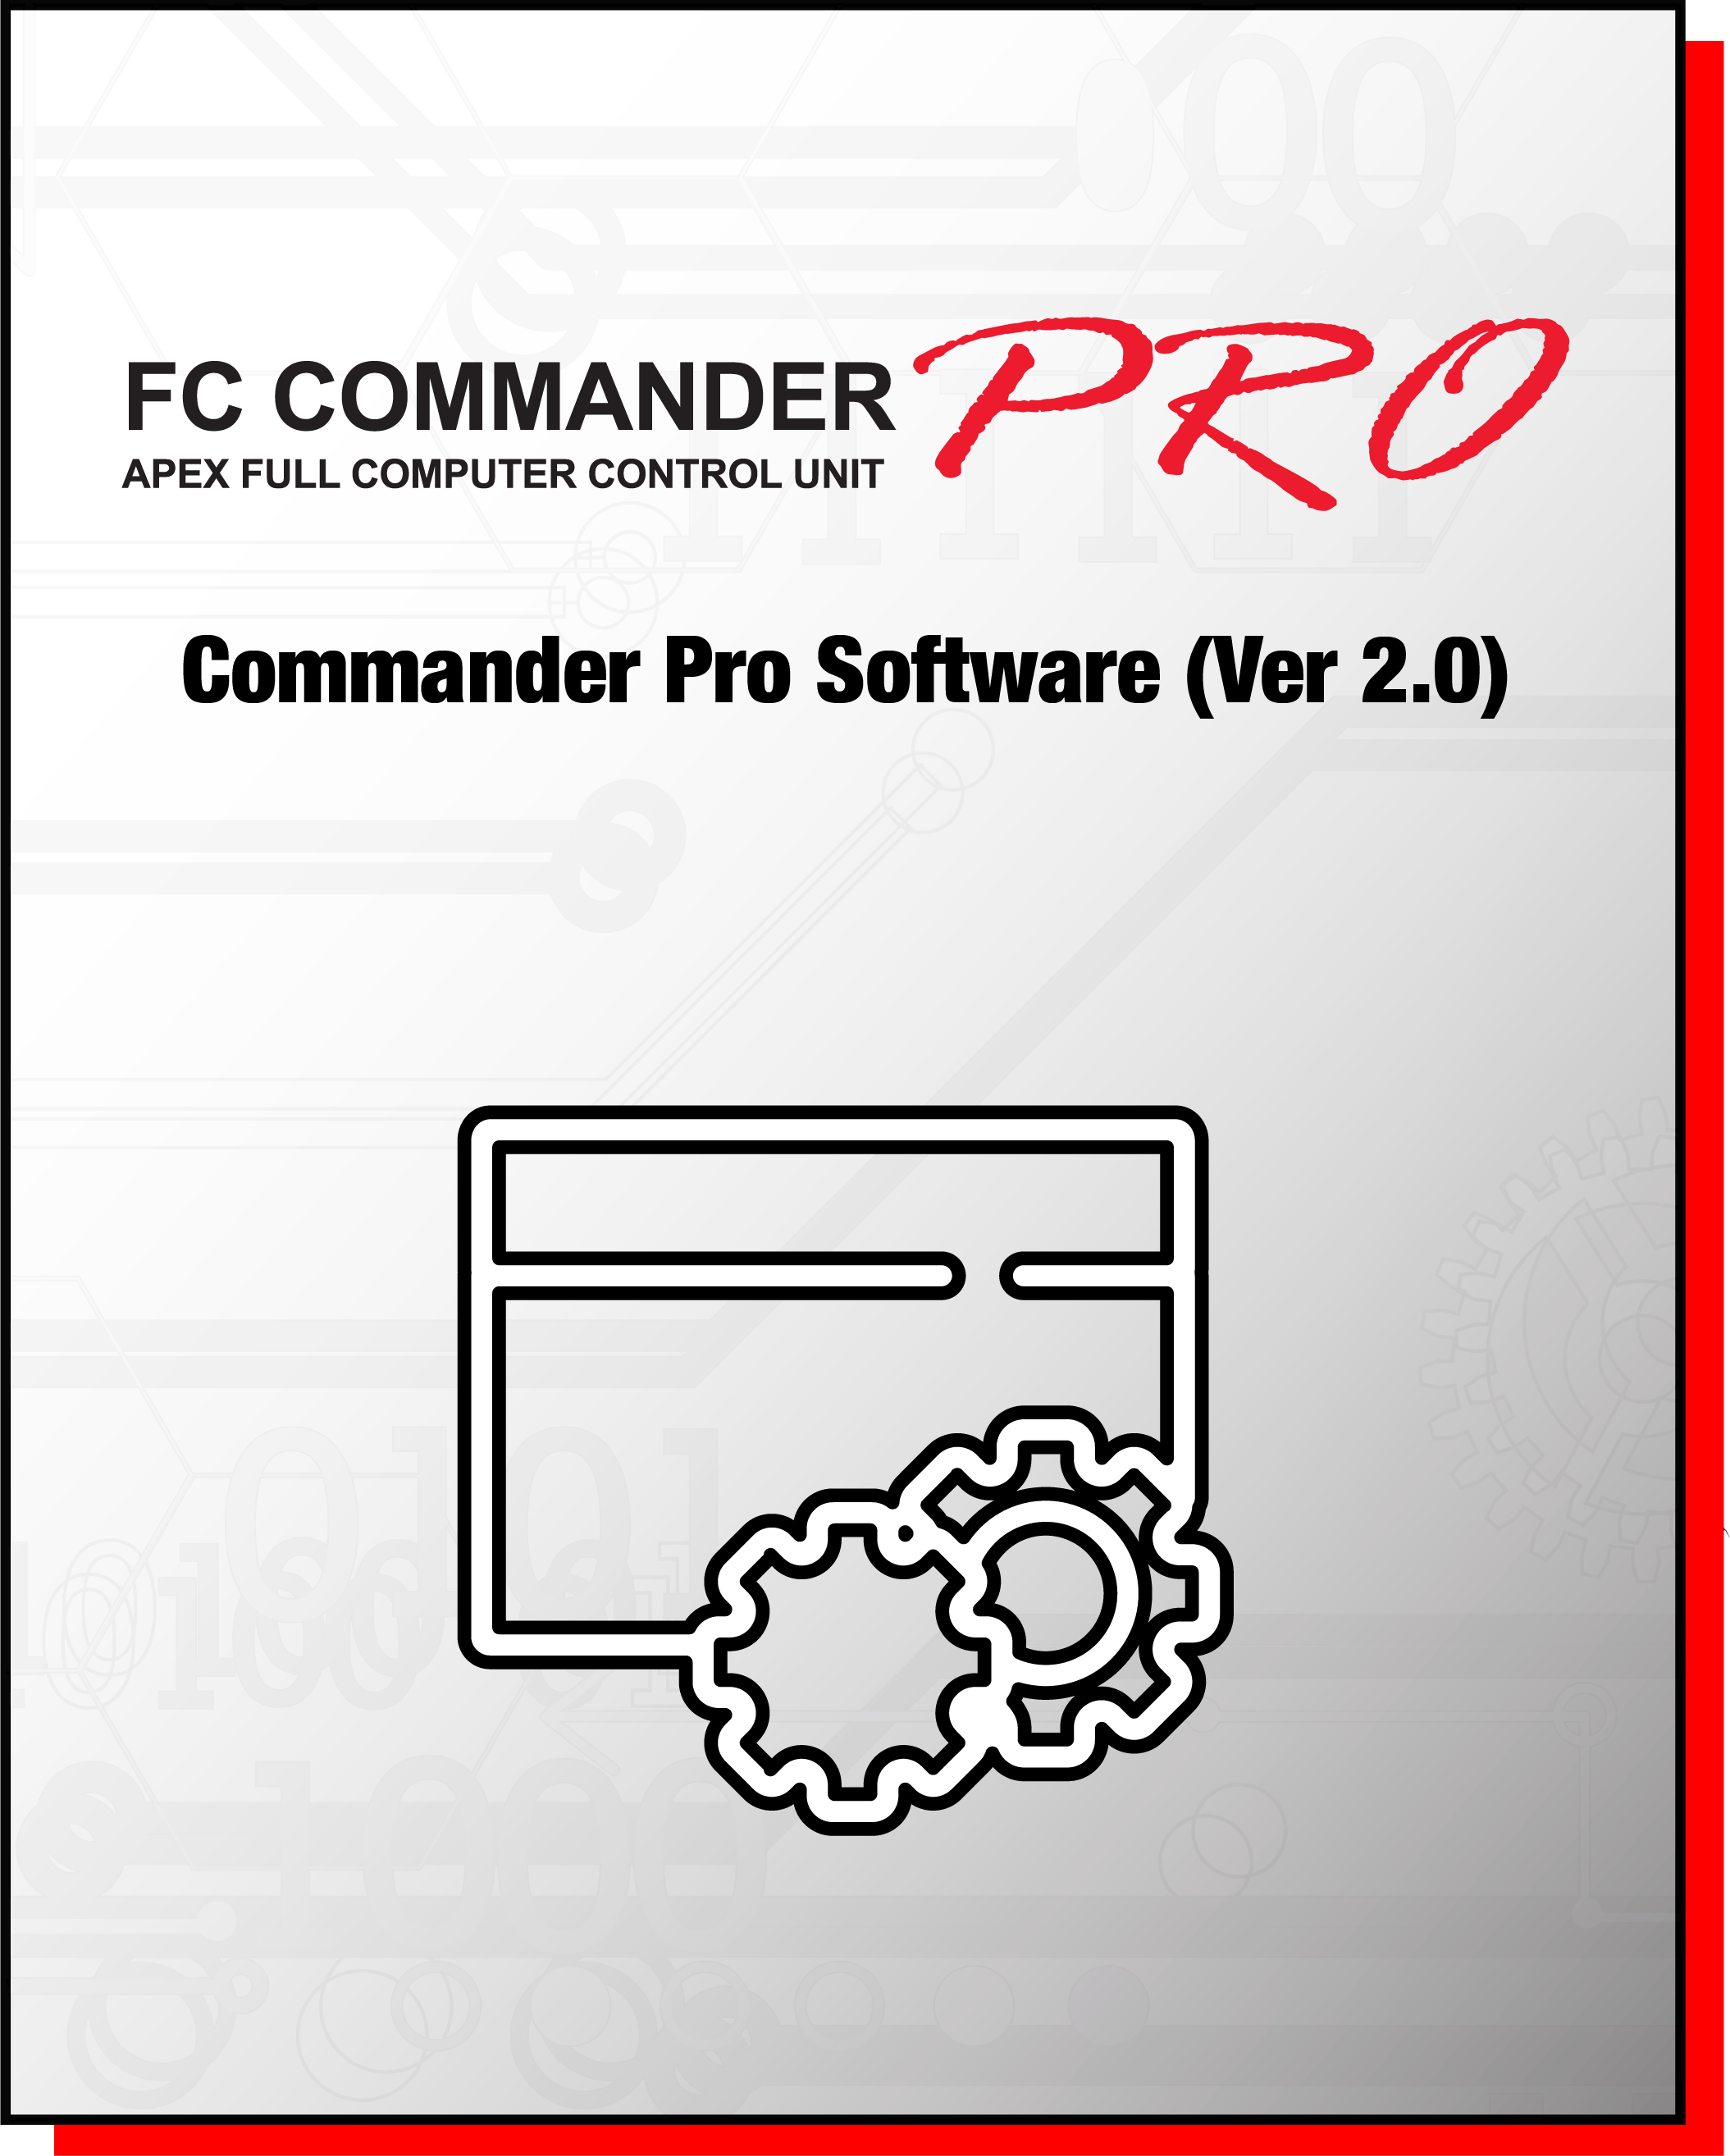 A'PEXi - Power FC - FC Commander Pro Software (Ver 2.0)